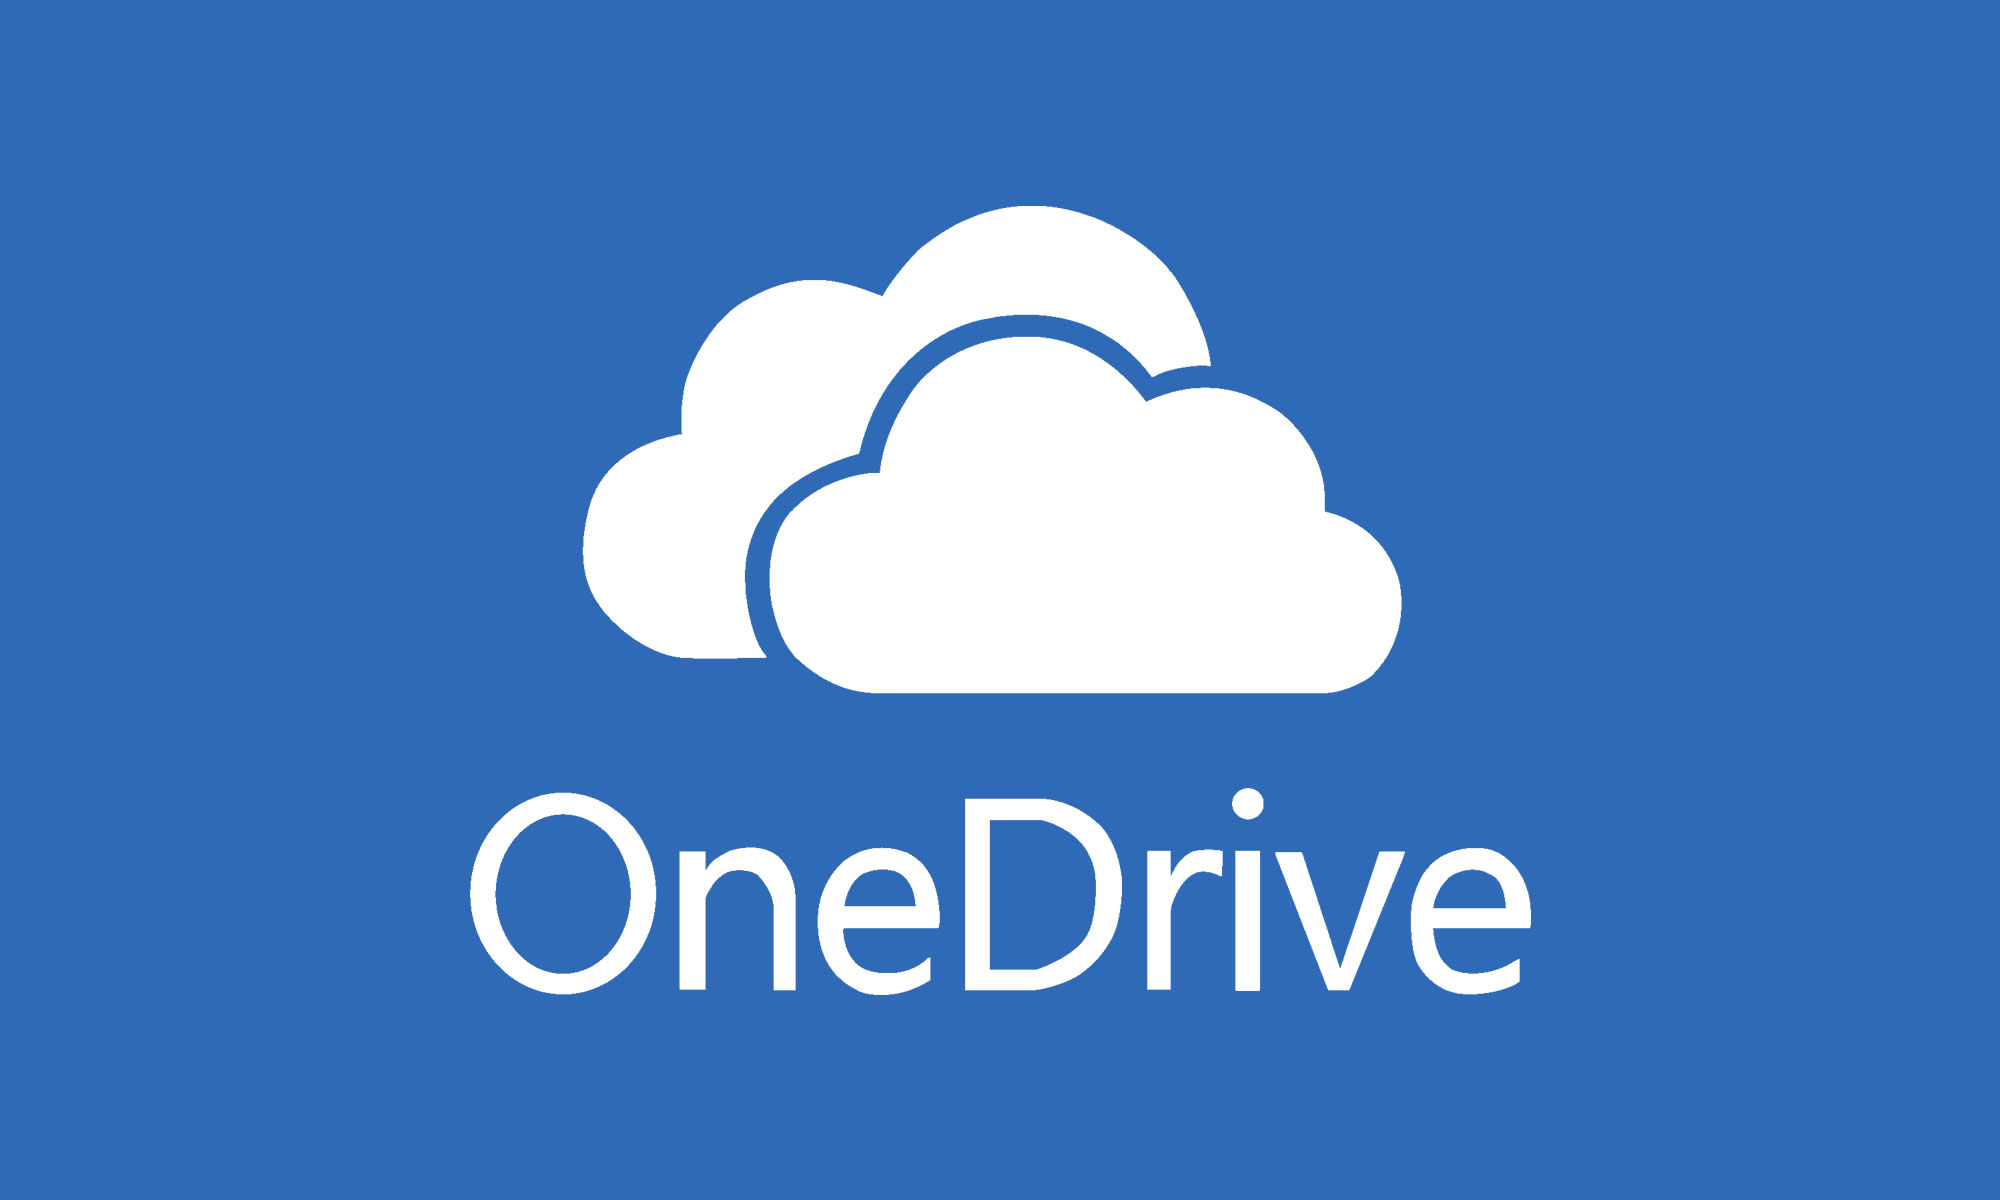 download onedrive windows 7